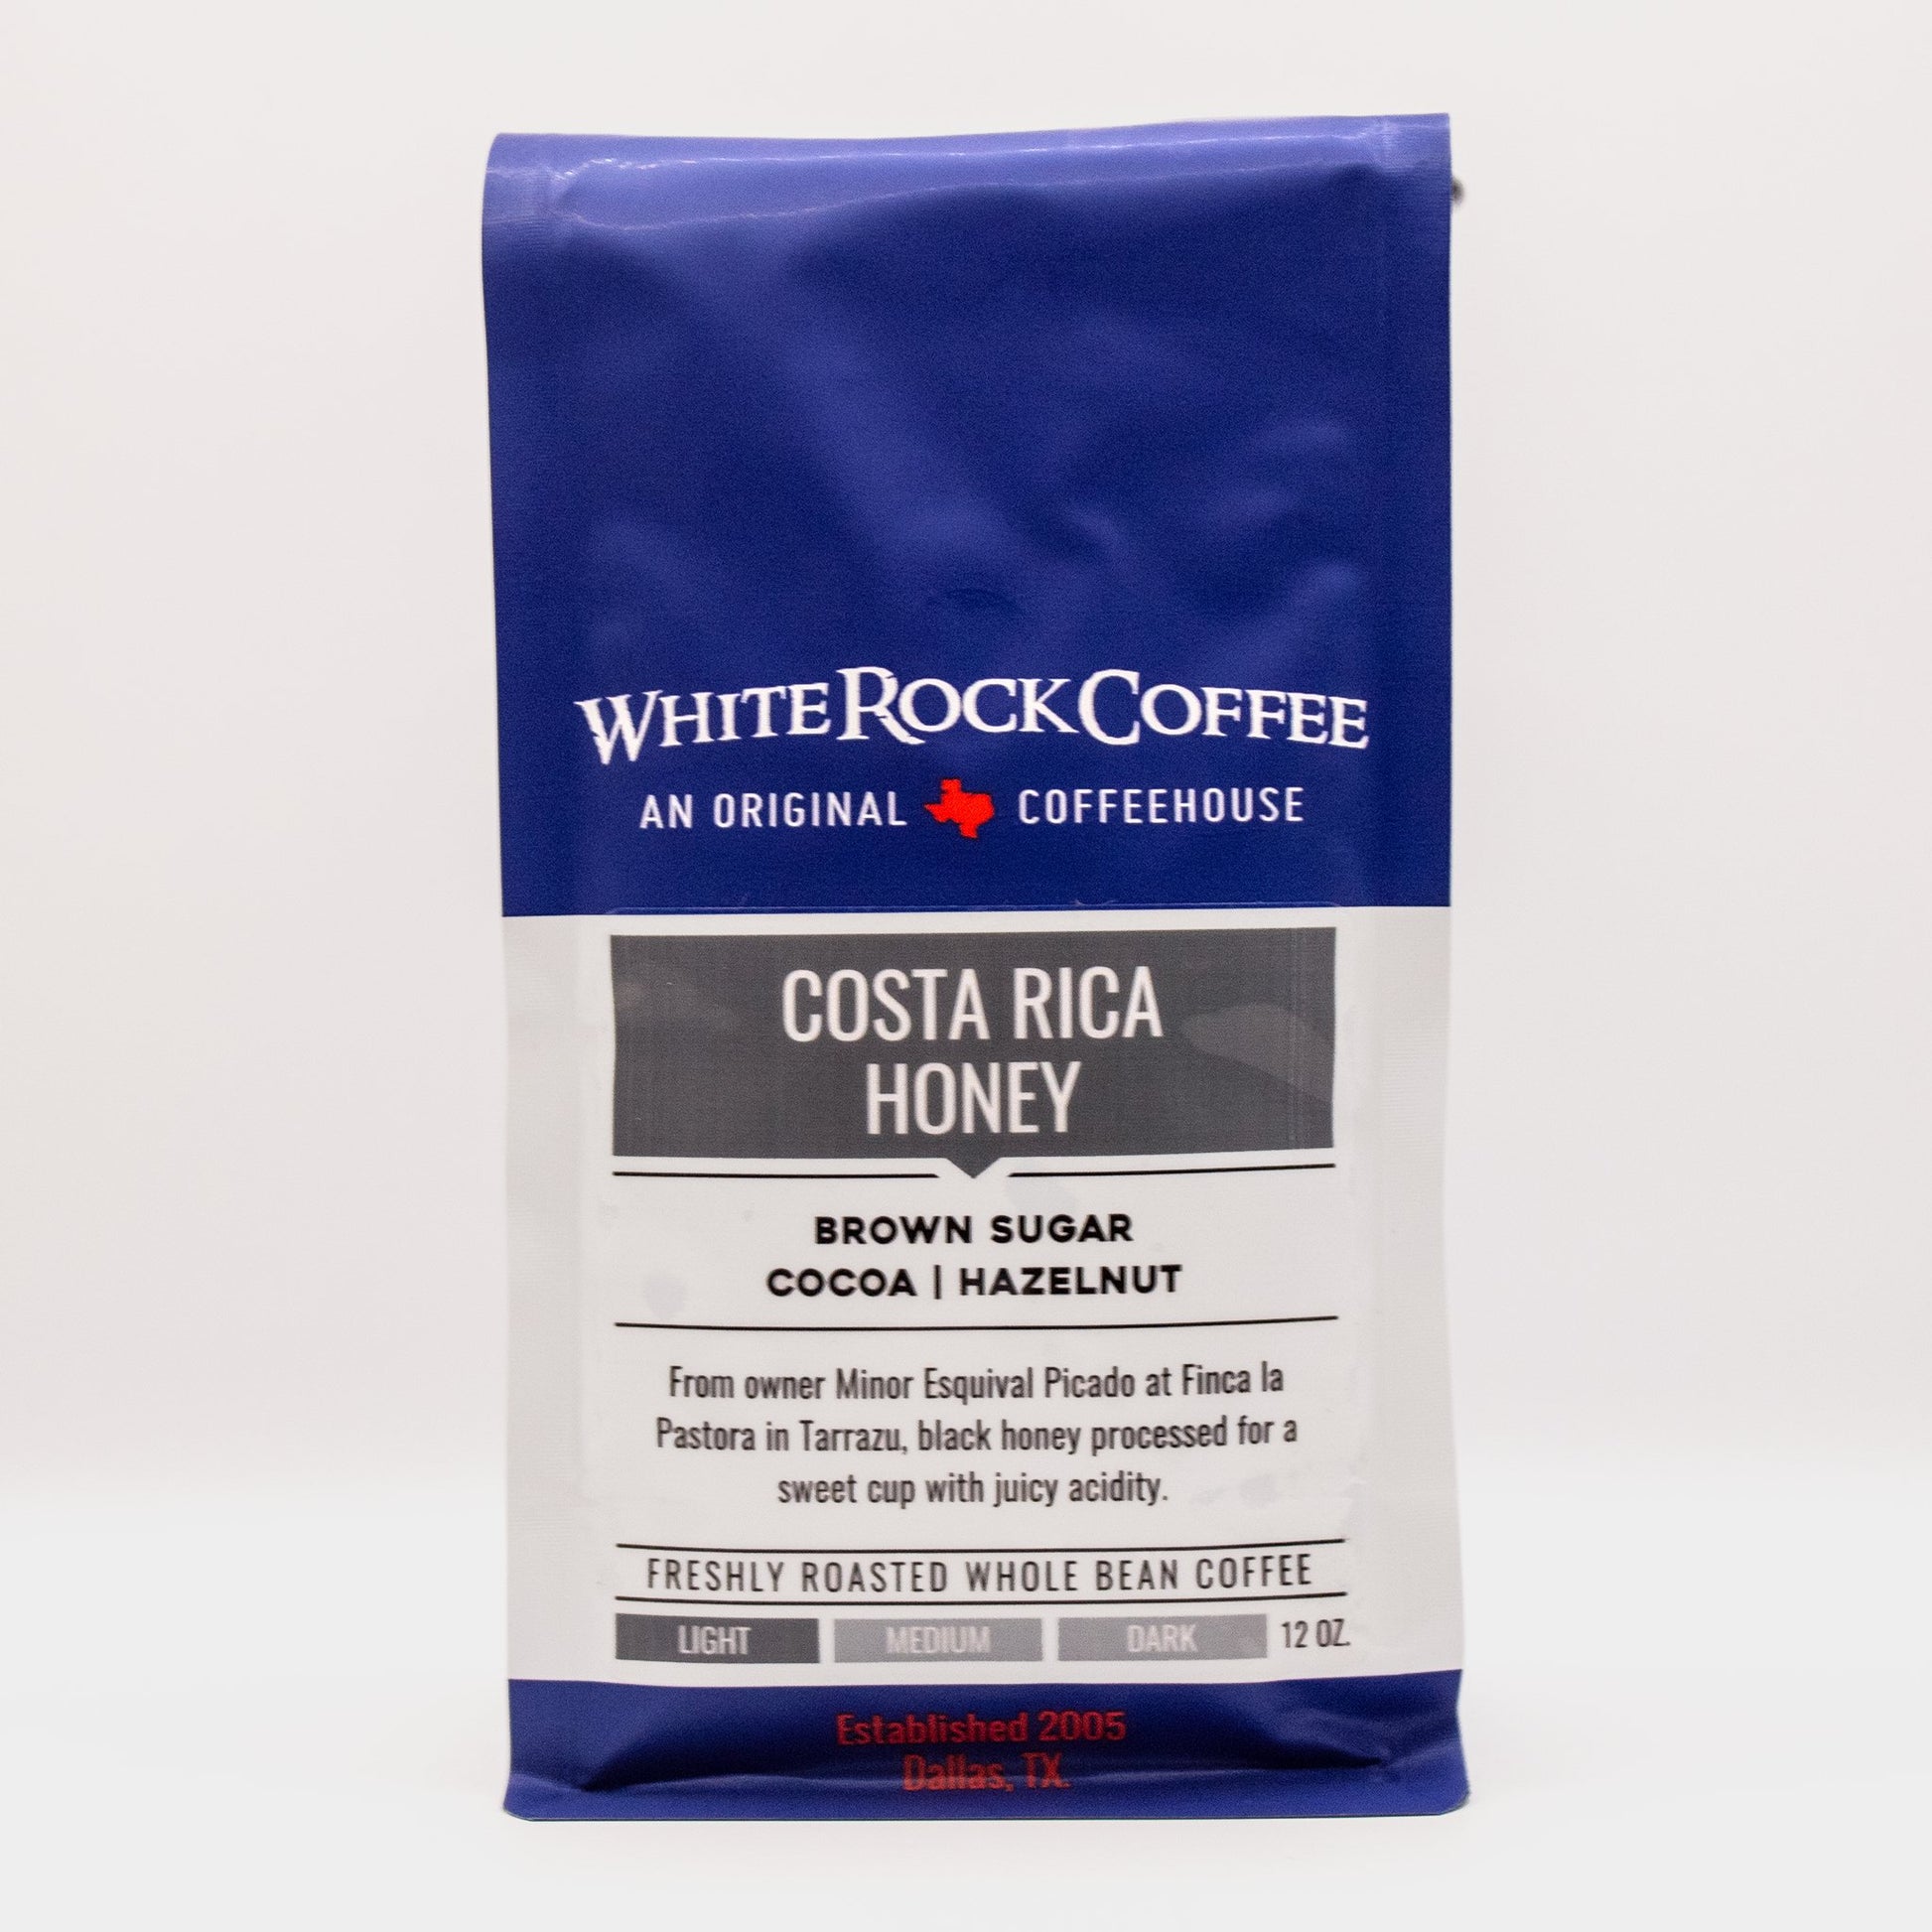 Costa Rica Honey - White Rock Coffee